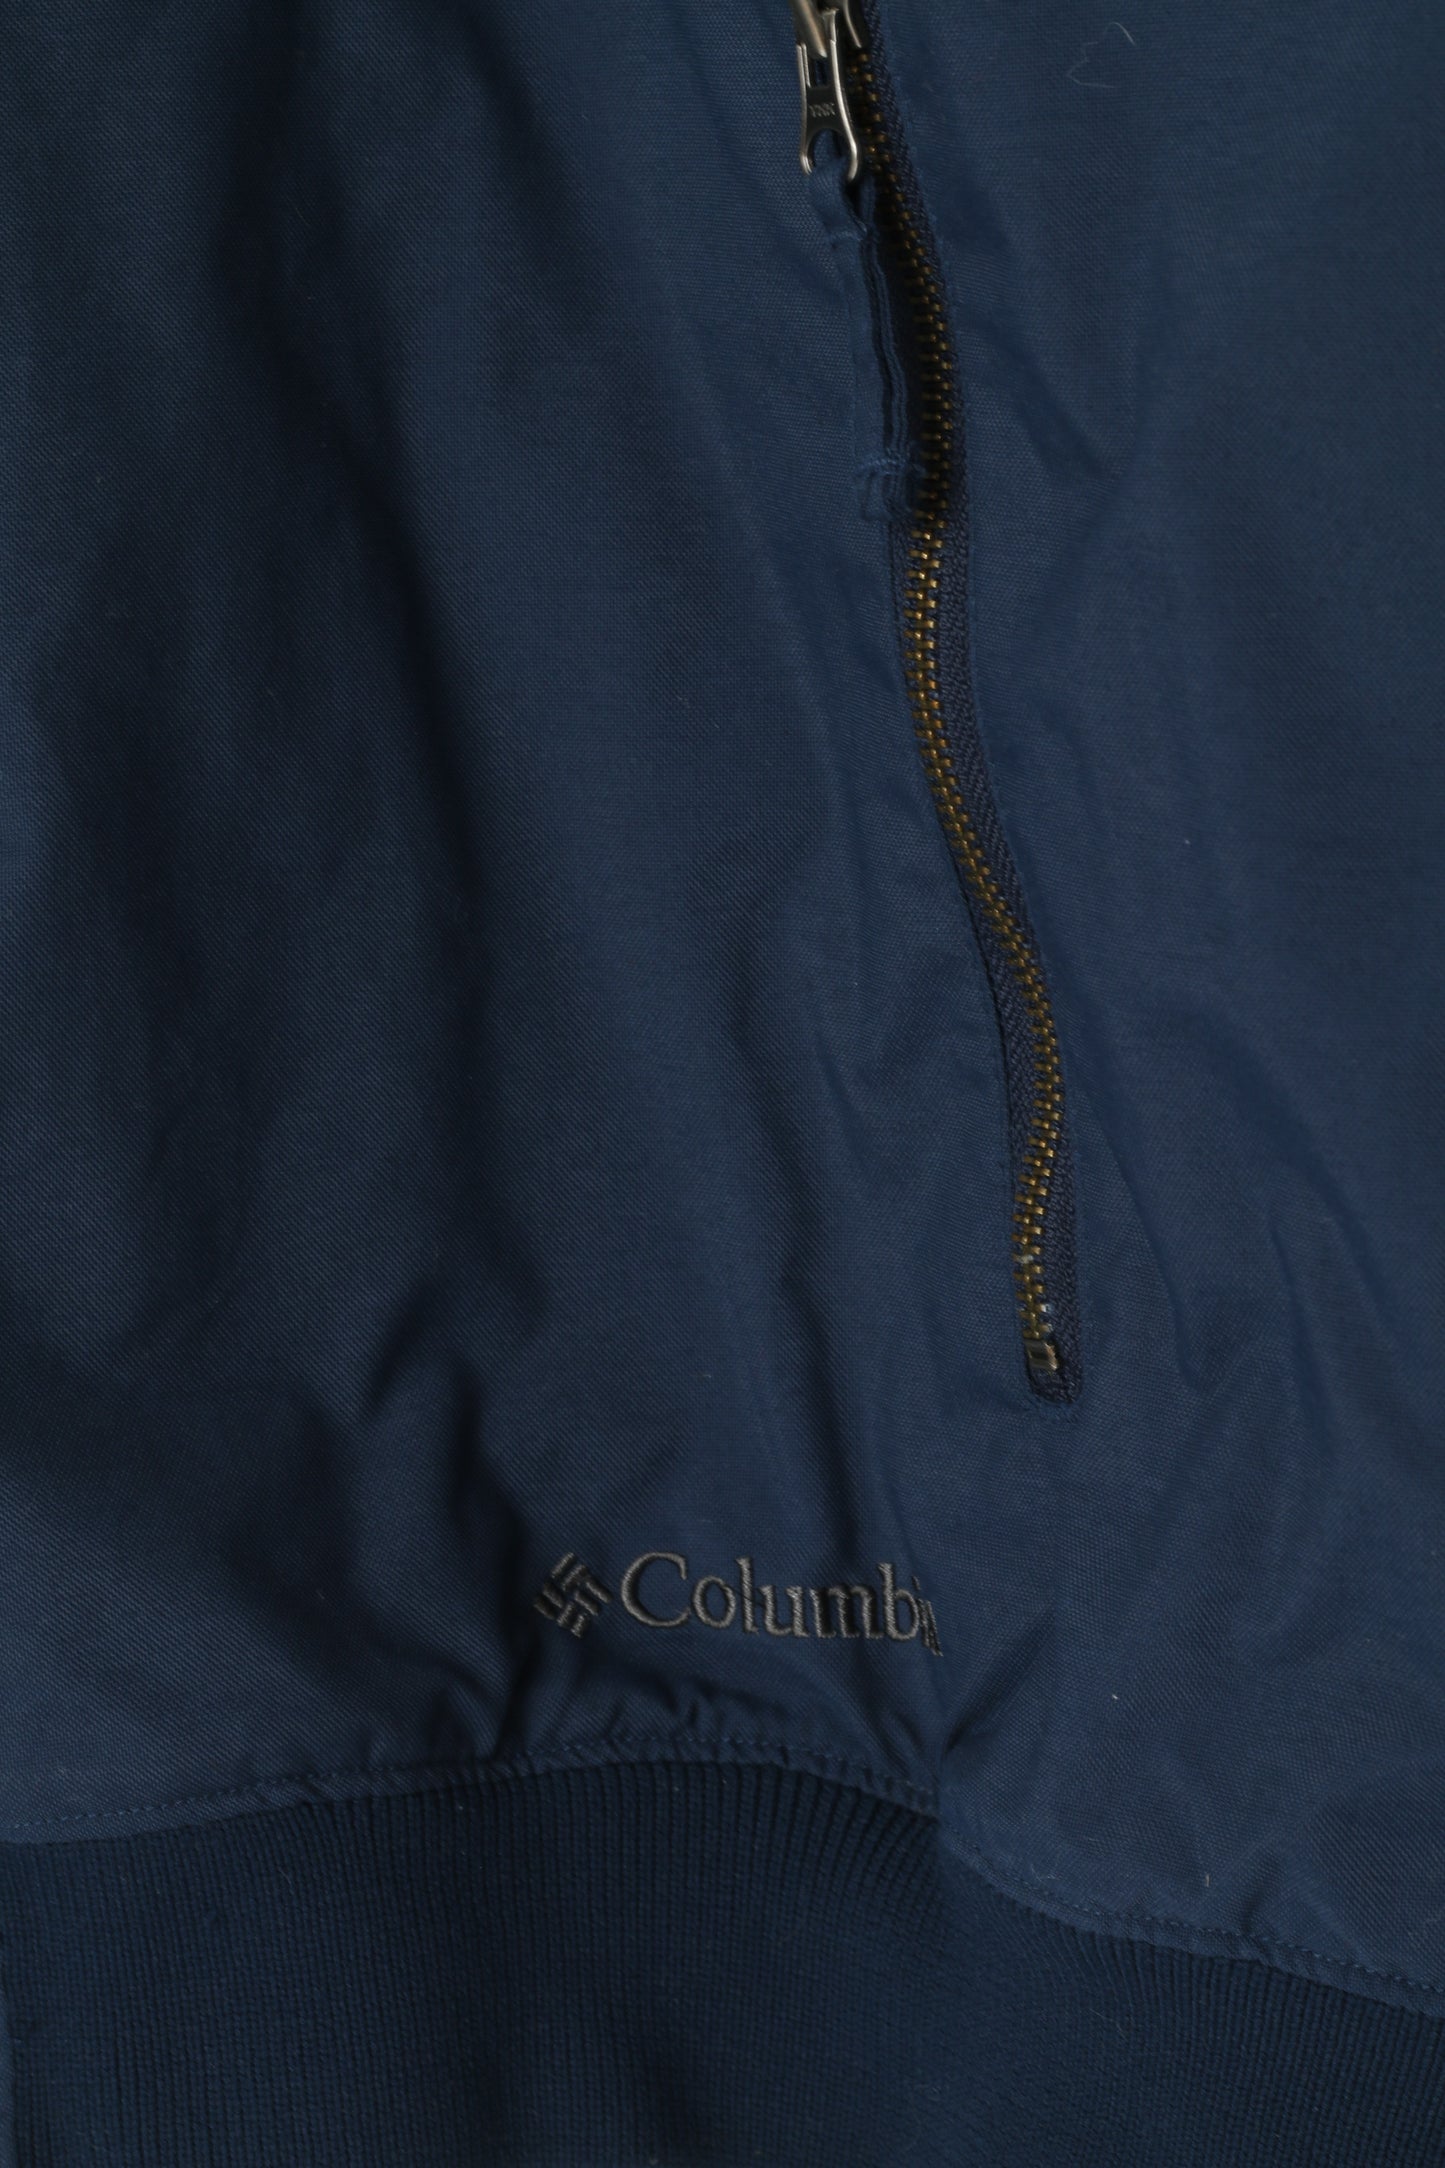 Columbia Sportswear Hommes XXL Bomber Veste Marine Nylon Imperméable Doublé Polaire Haut